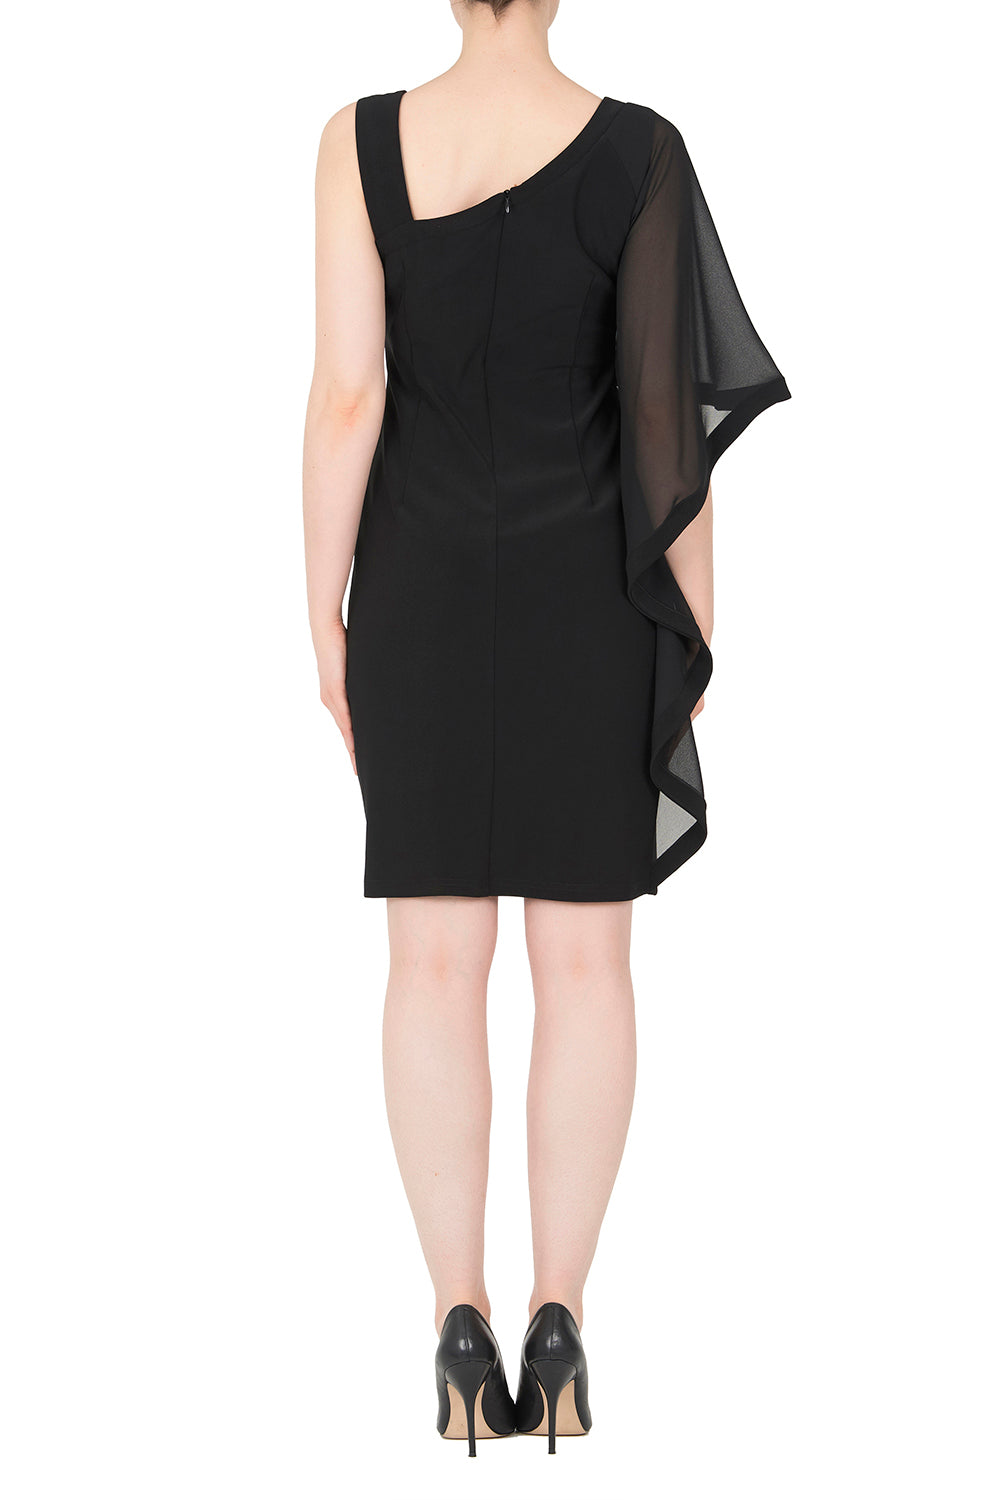 Joseph Ribkoff Black Dress Style 191203